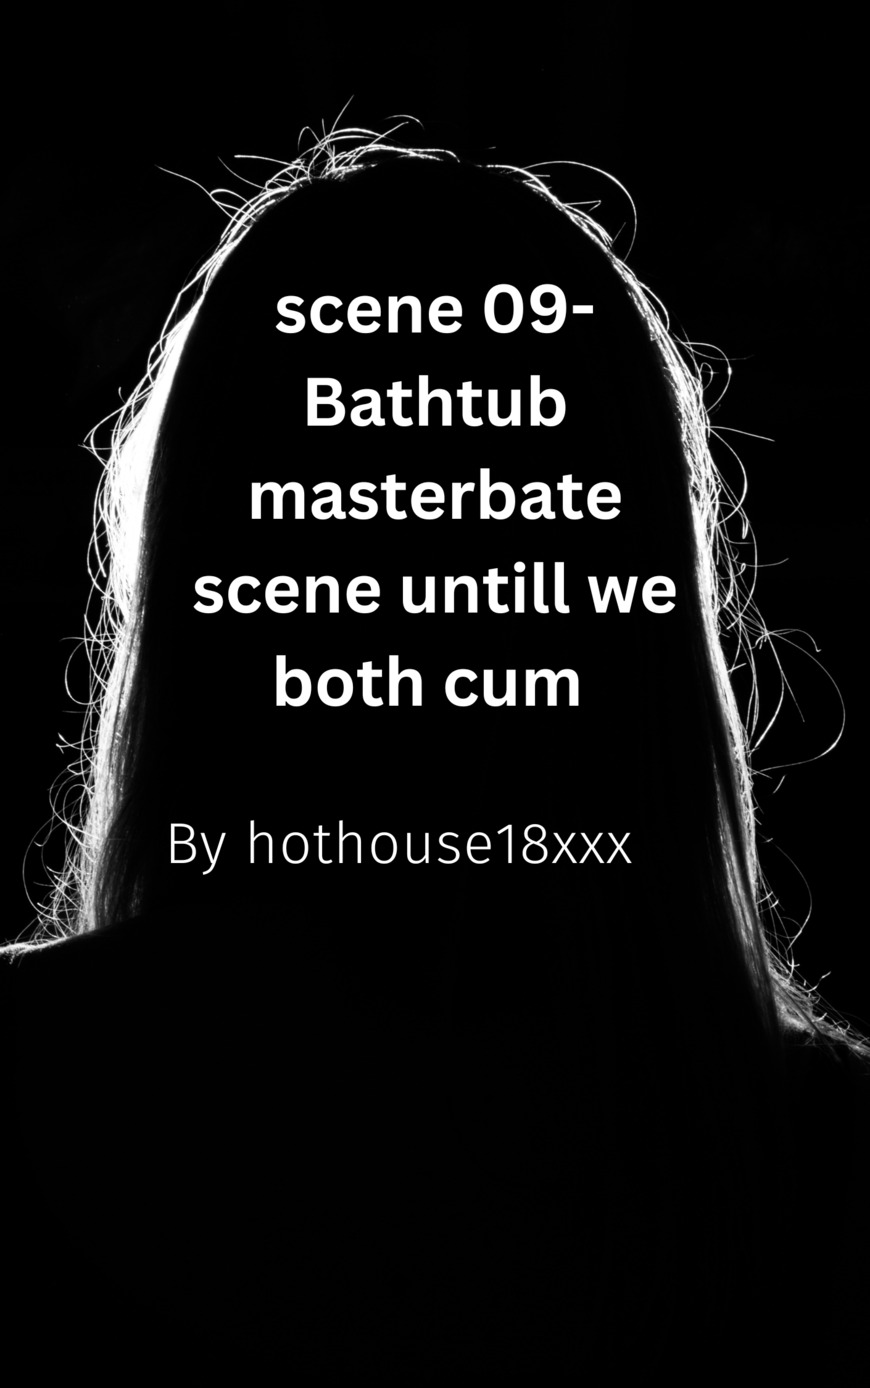 scene 09- Bathtub masterbate scene untill we both cum  - clip cover background